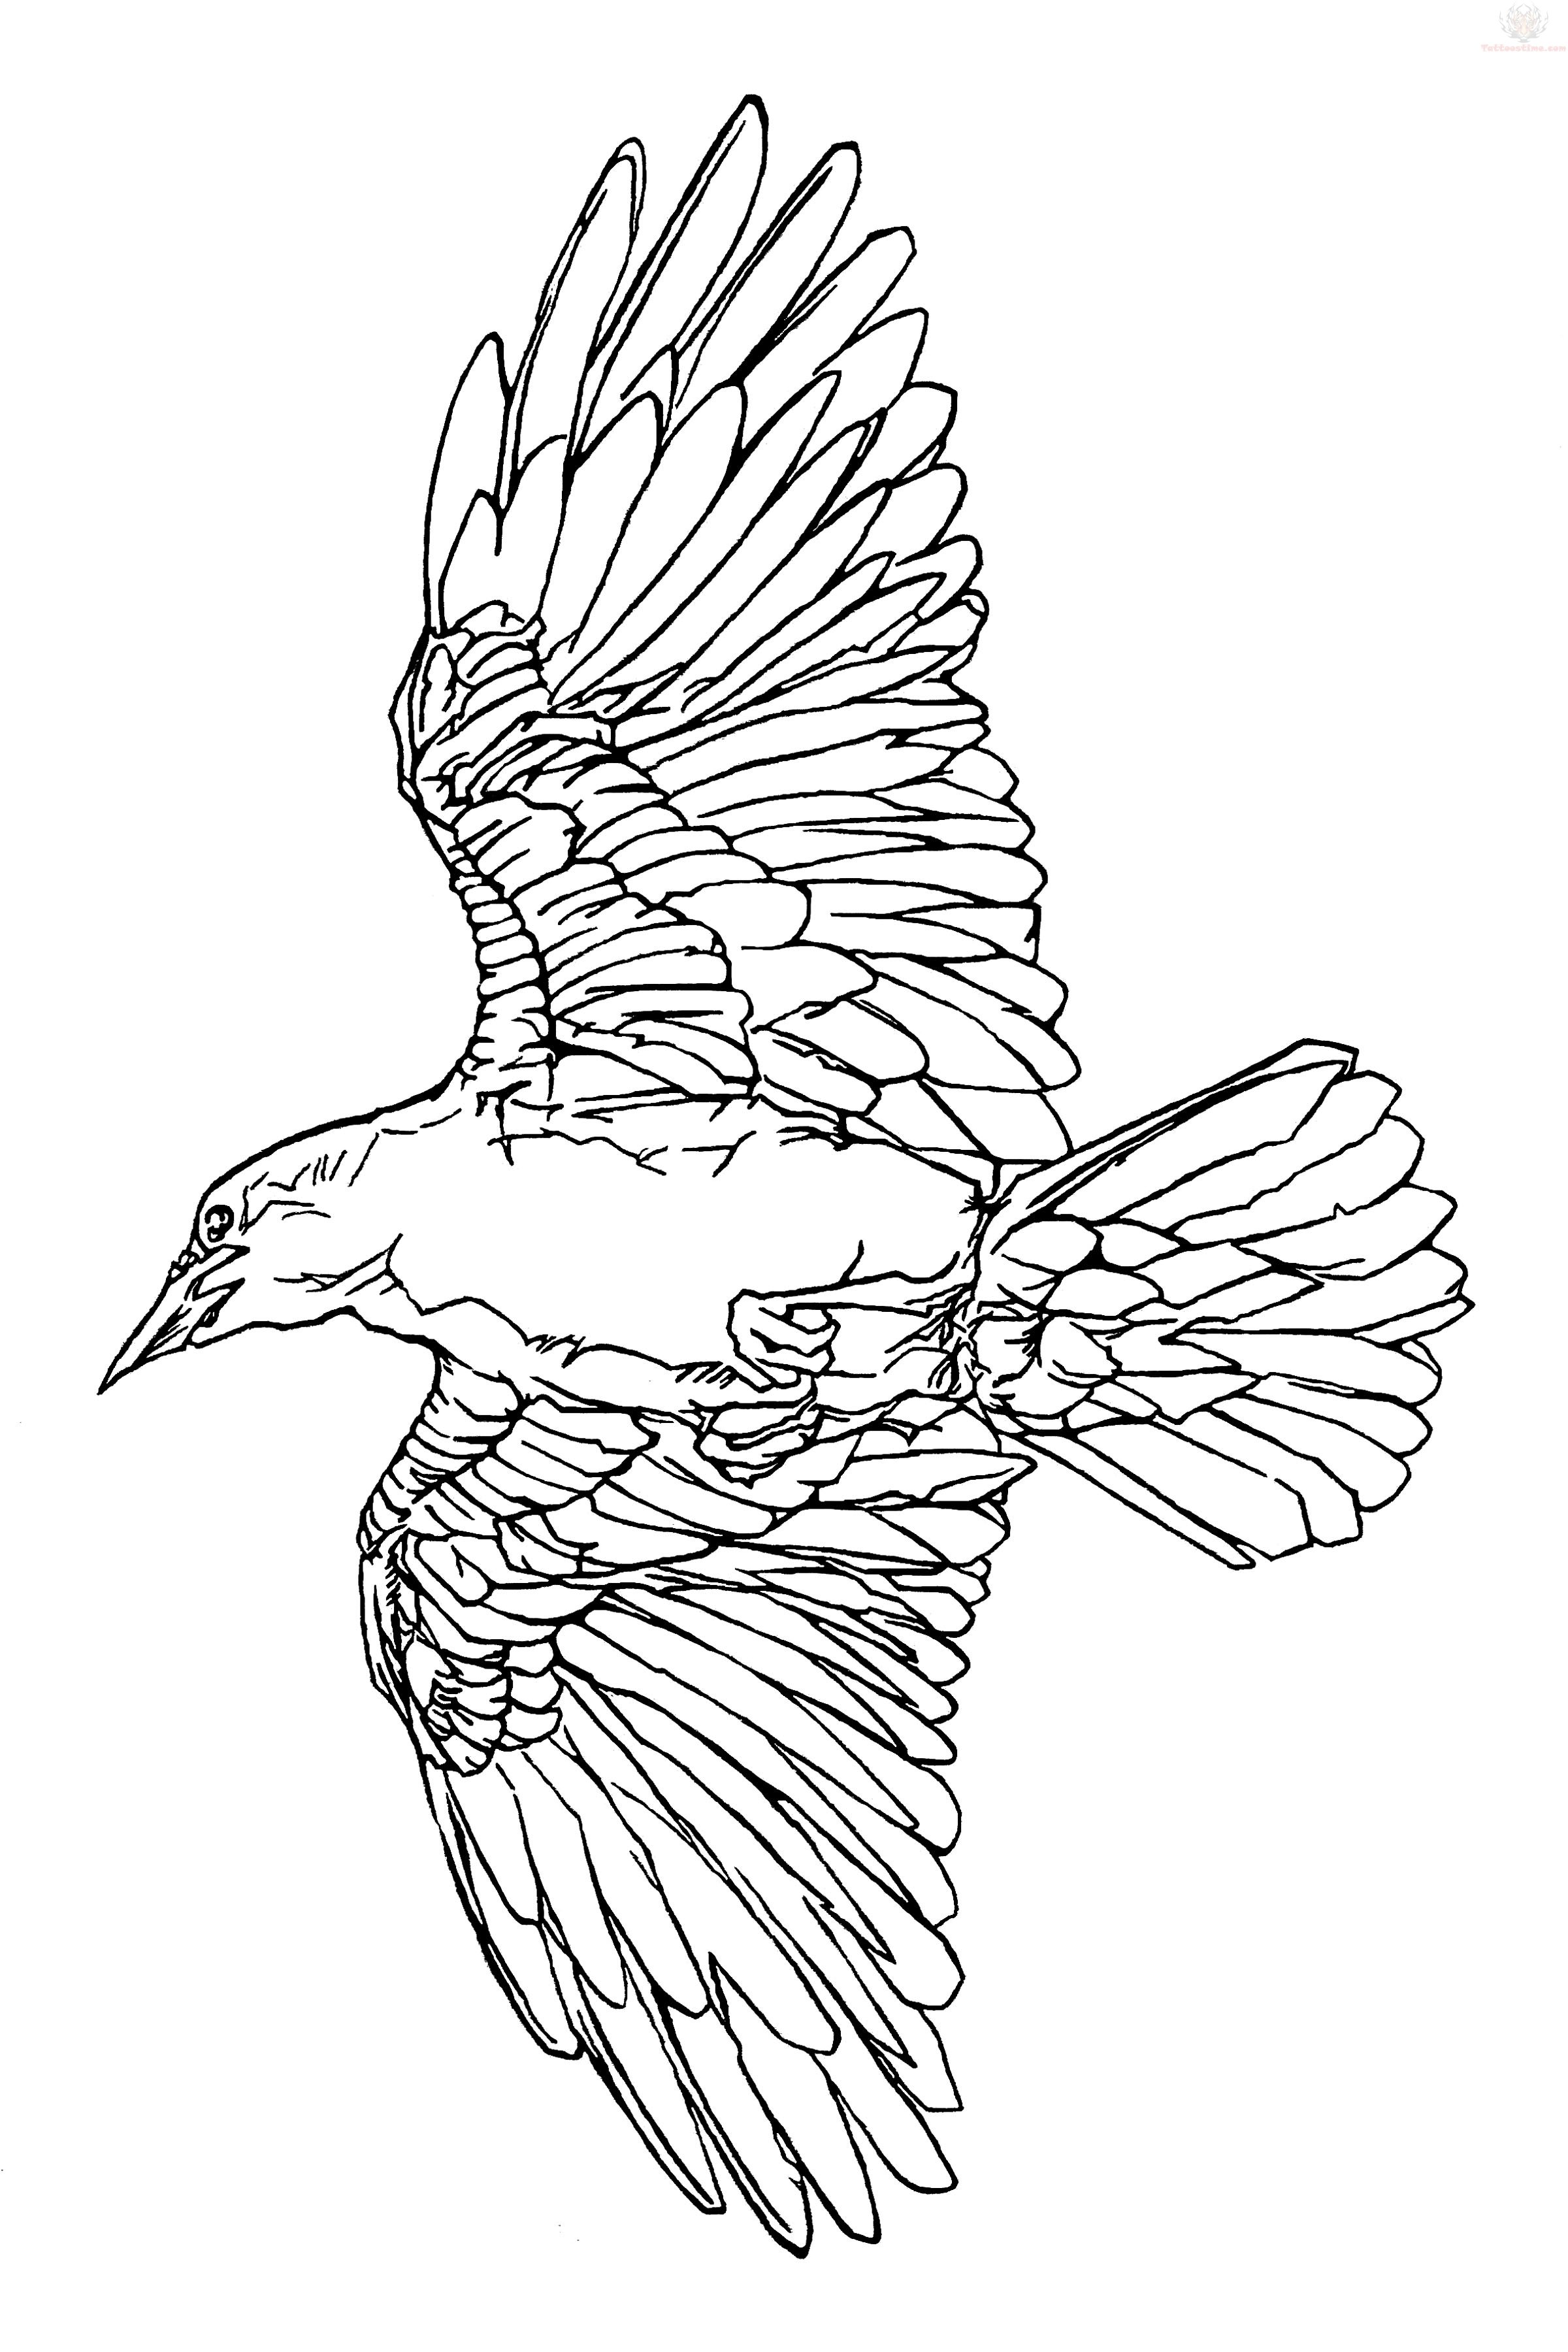 Cool outline flying raven tattoo design